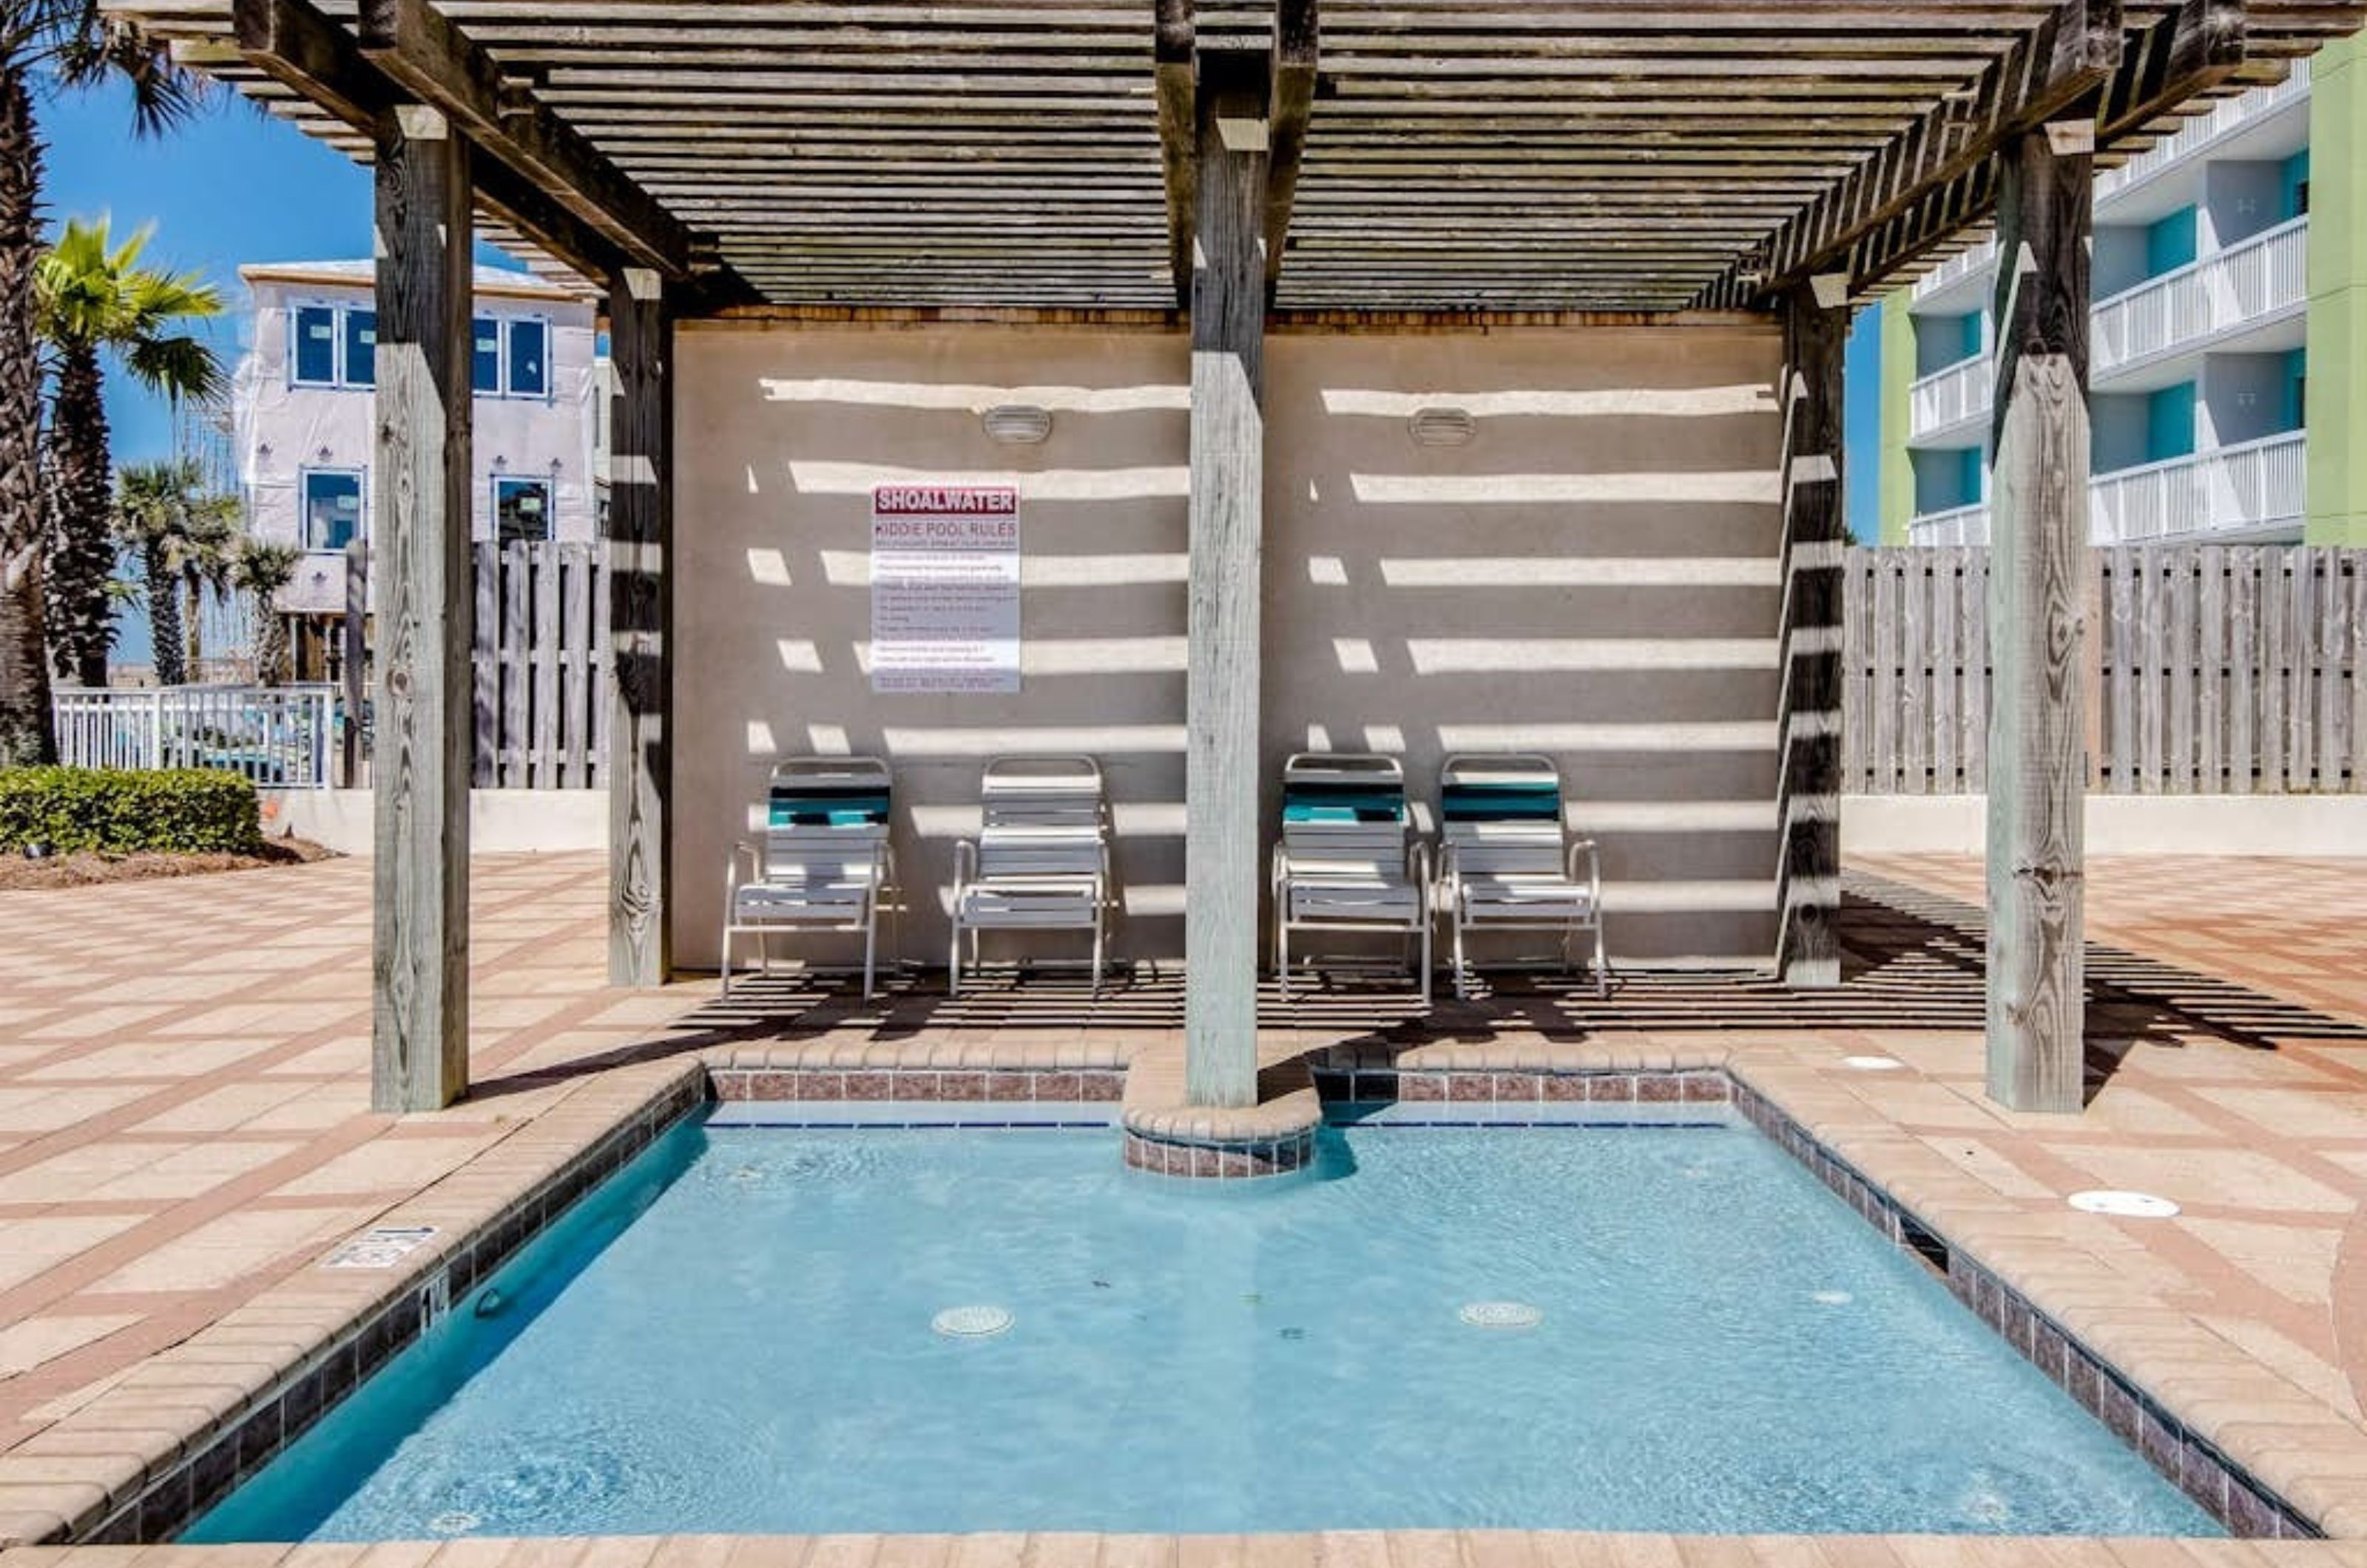 The outdoor children's pool at Shoalwater Condominiums in Orange Beach Alabama 